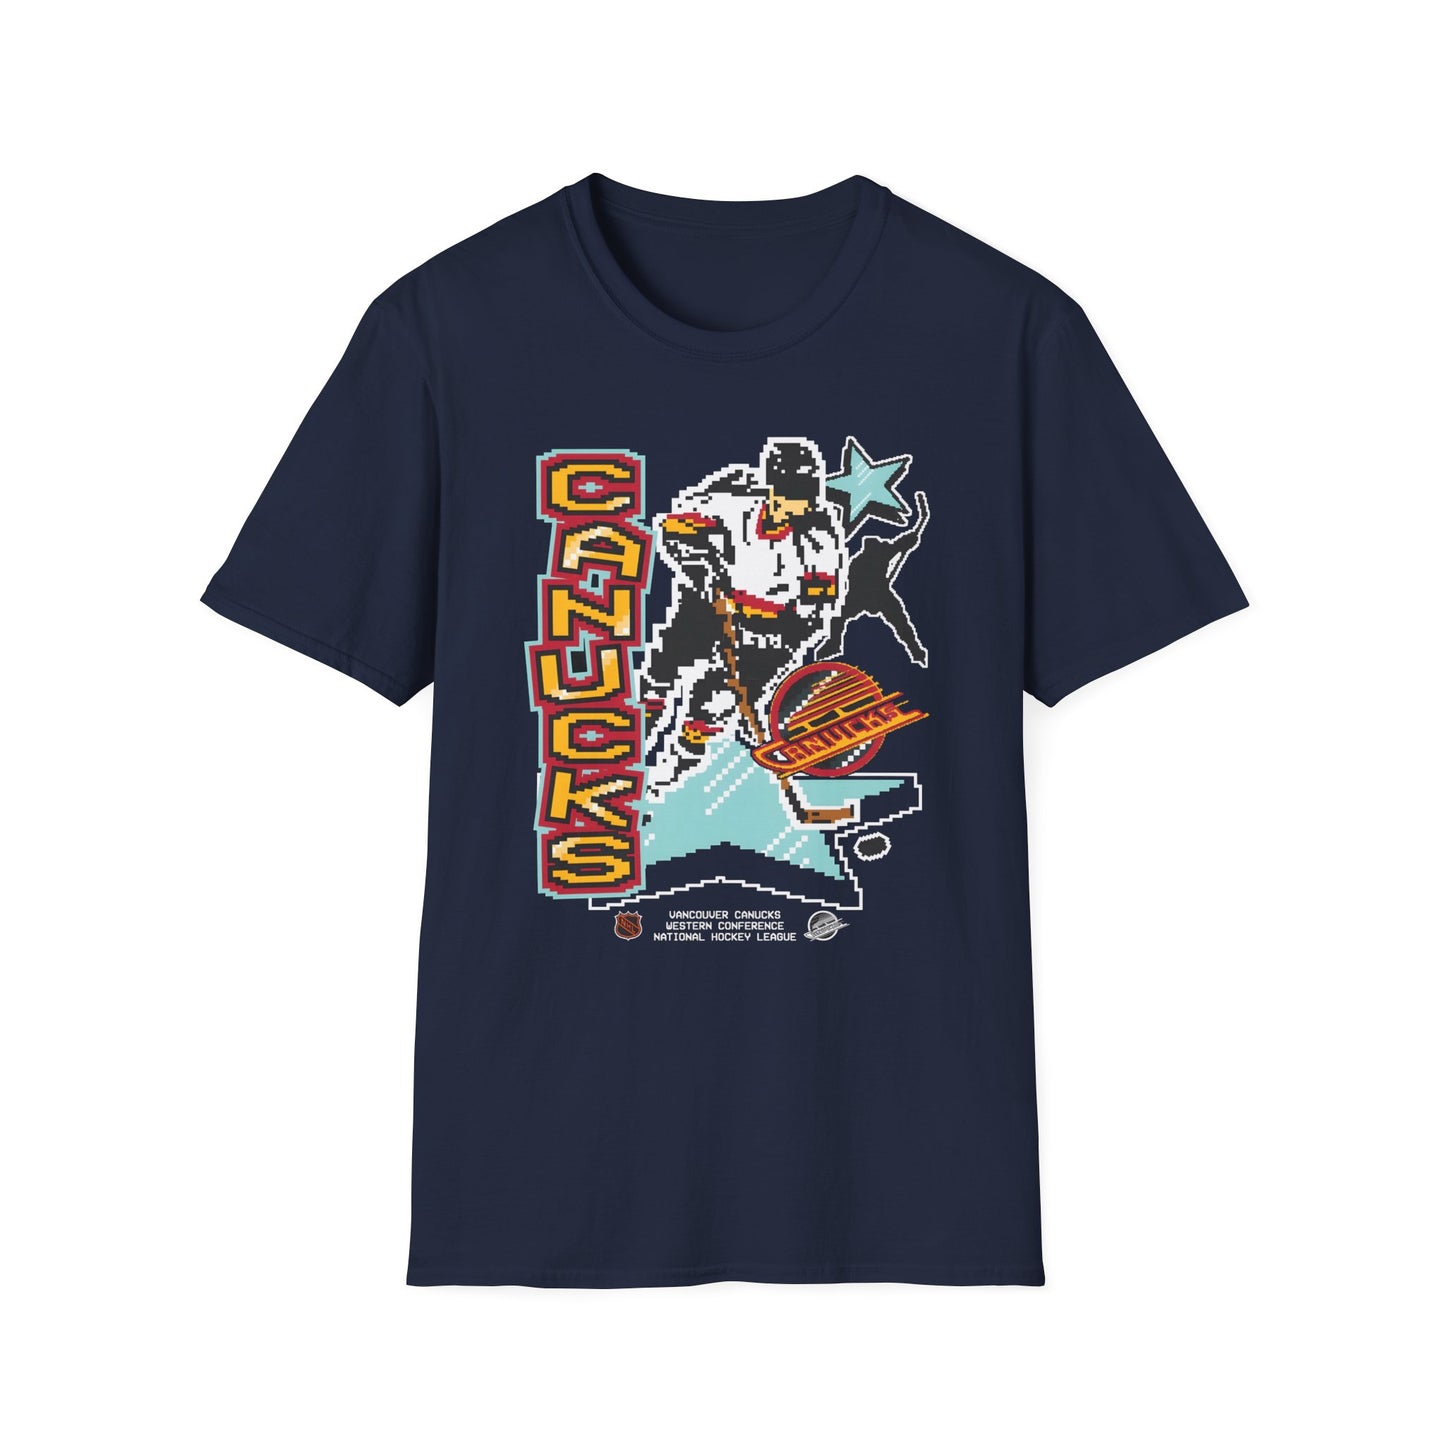 Canucks Slapshot Graphic T-Shirt